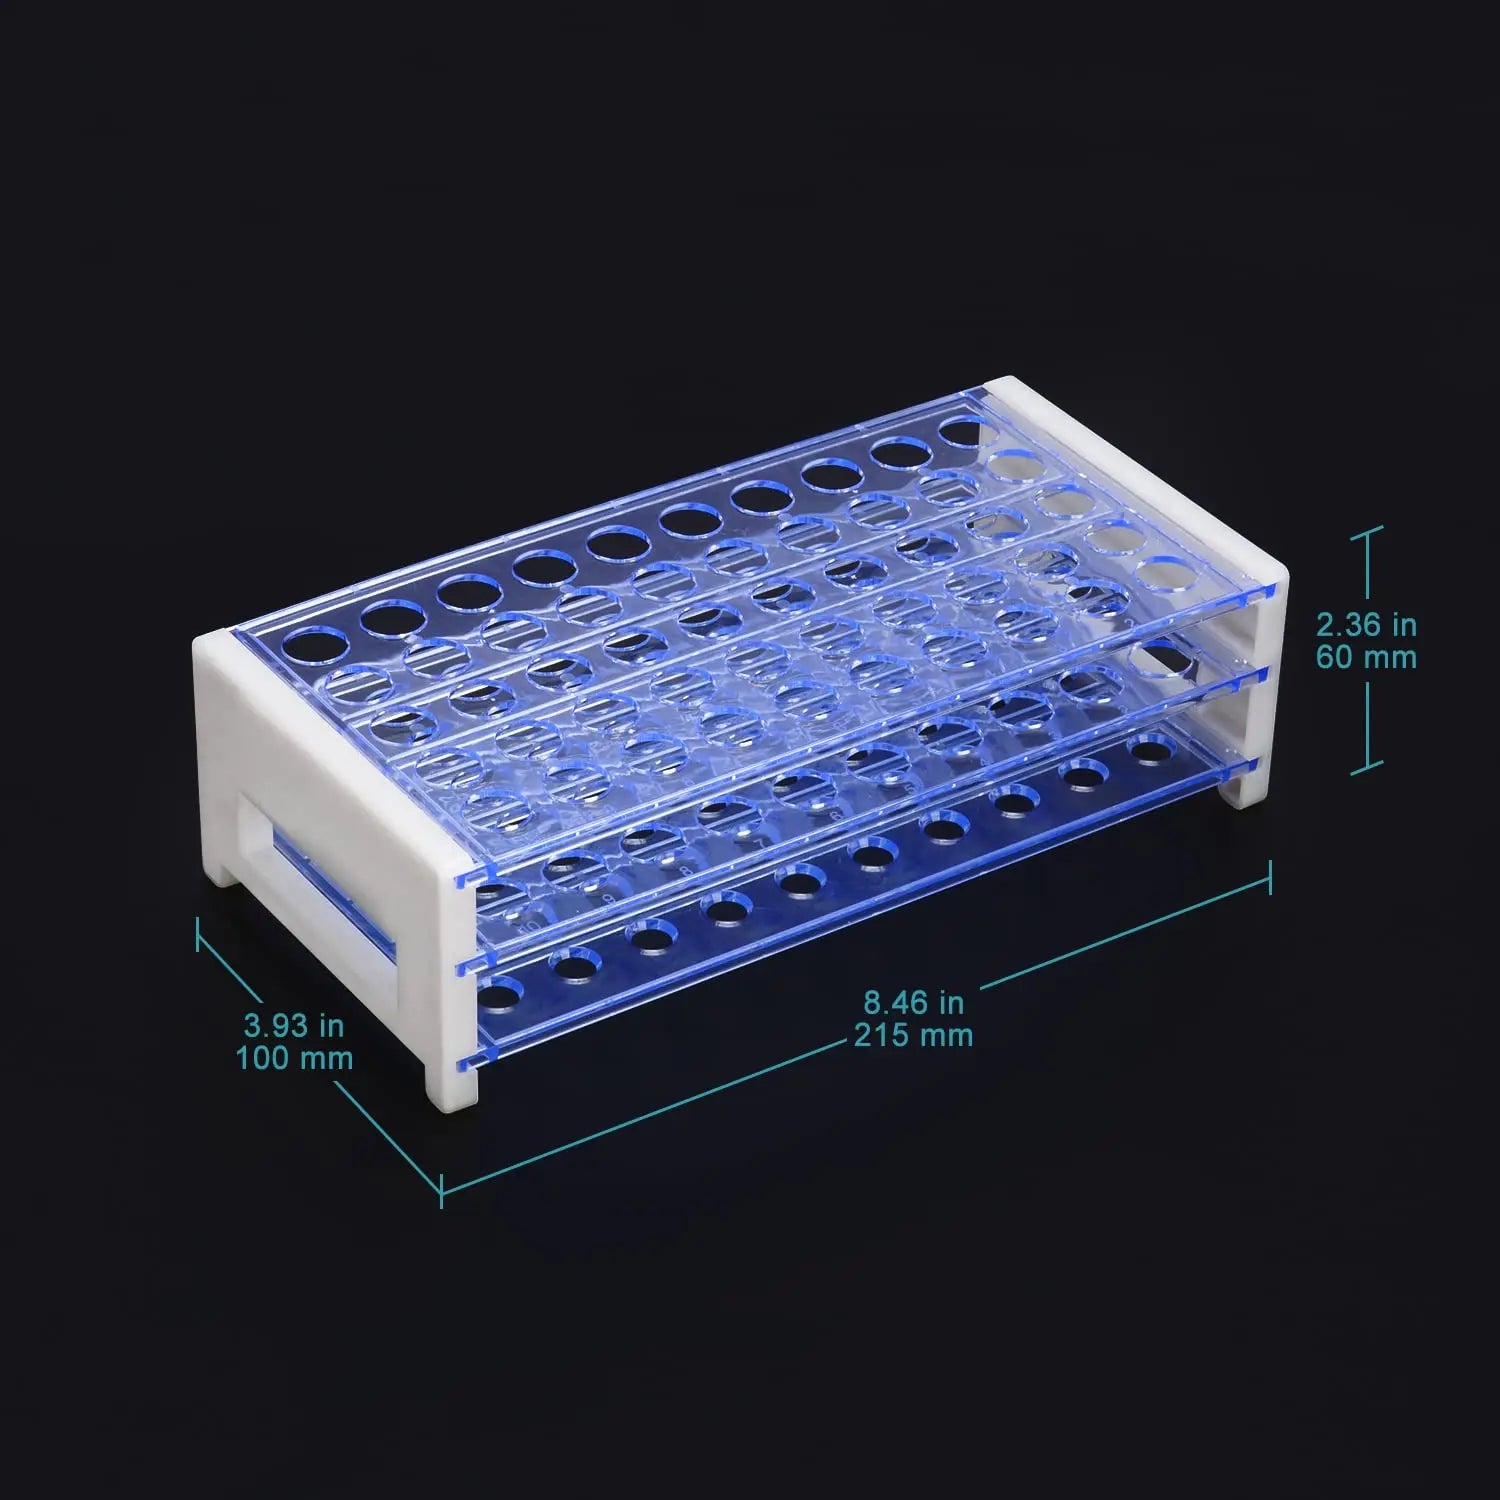 3-Tier Detachable Blue Plastic Tube Holder Stand Rack, 50-Place Racks